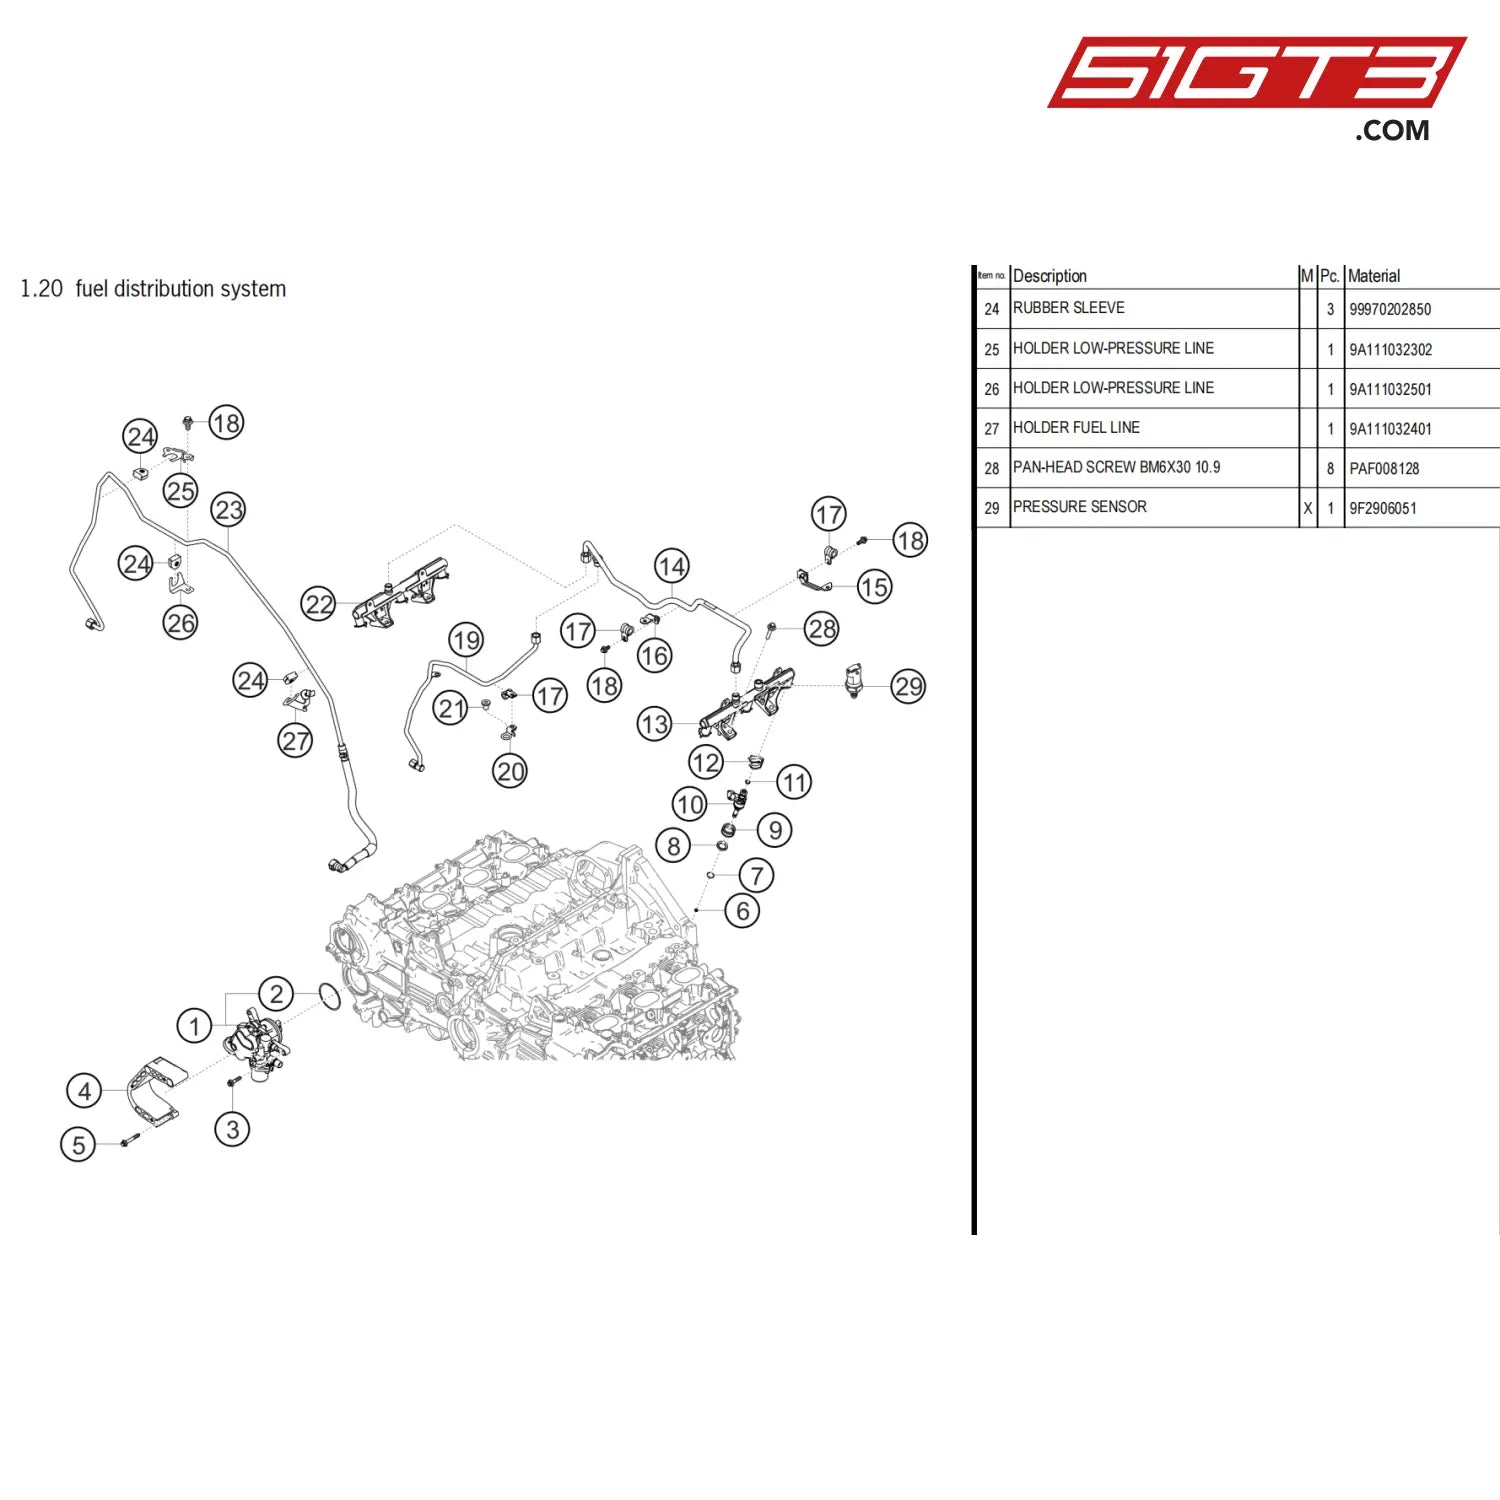 O-Ring 55 25X2 62N - 99970764340 [Porsche 718 Cayman Gt4 Clubsport] Fuel Distribution System